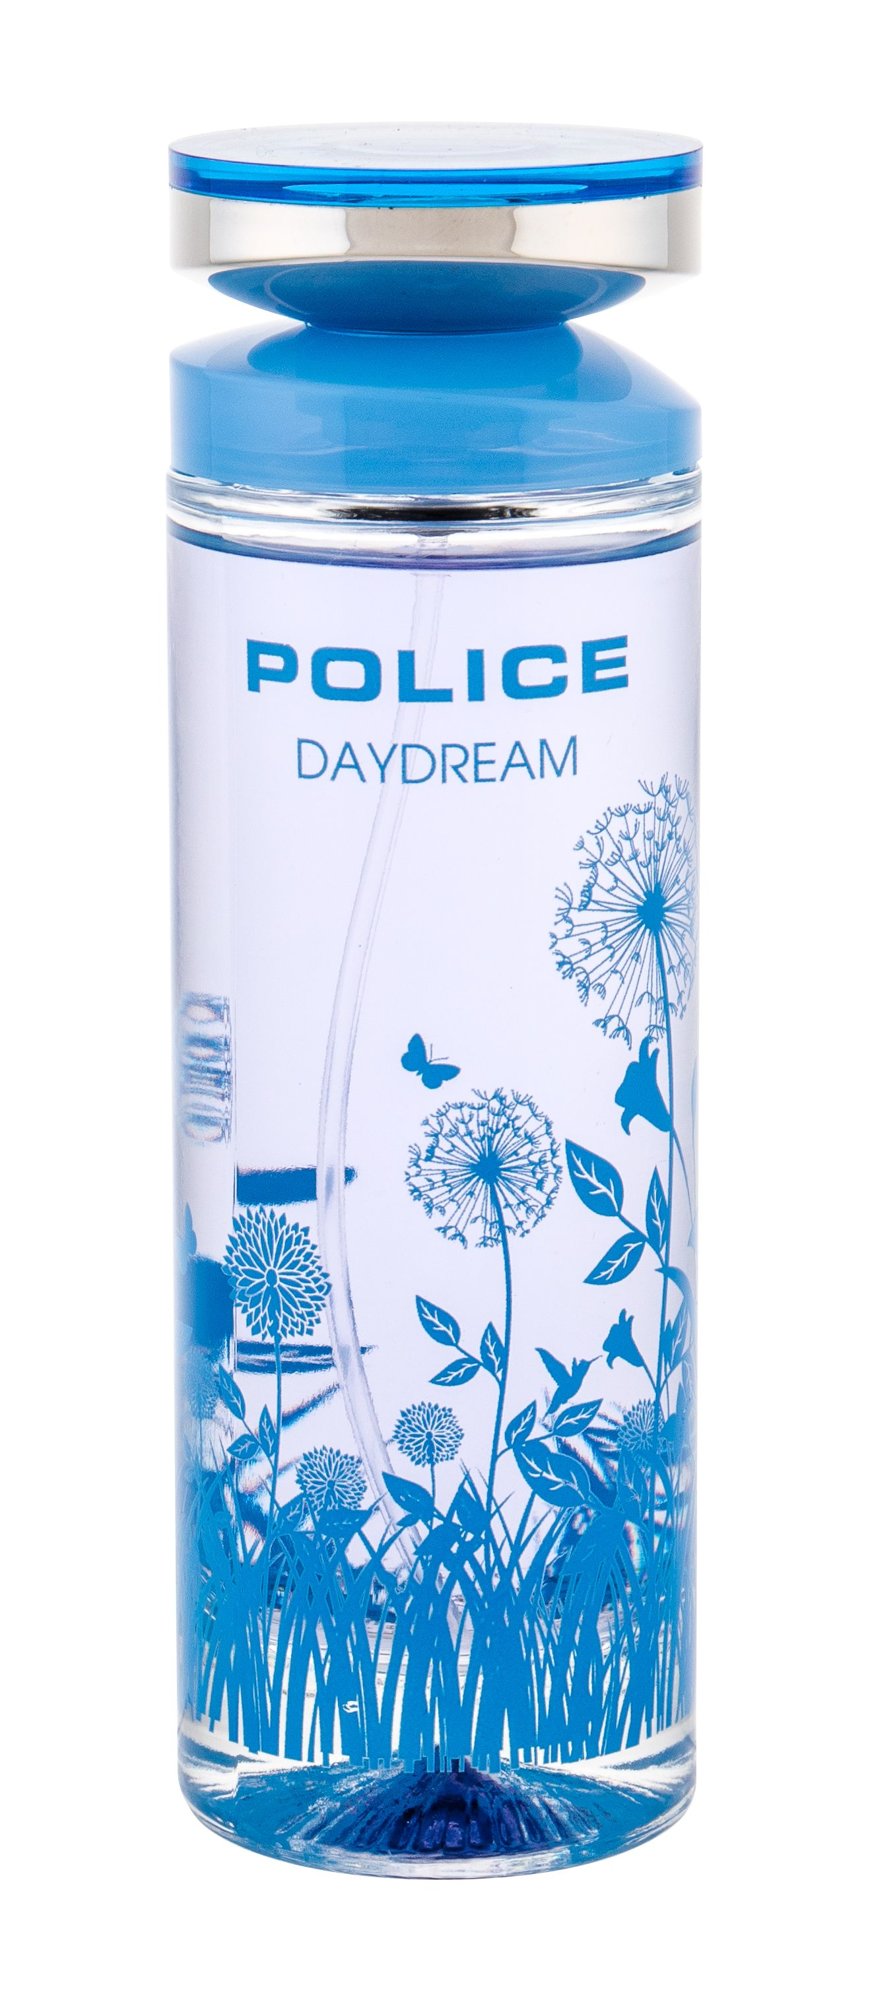 Police Daydream